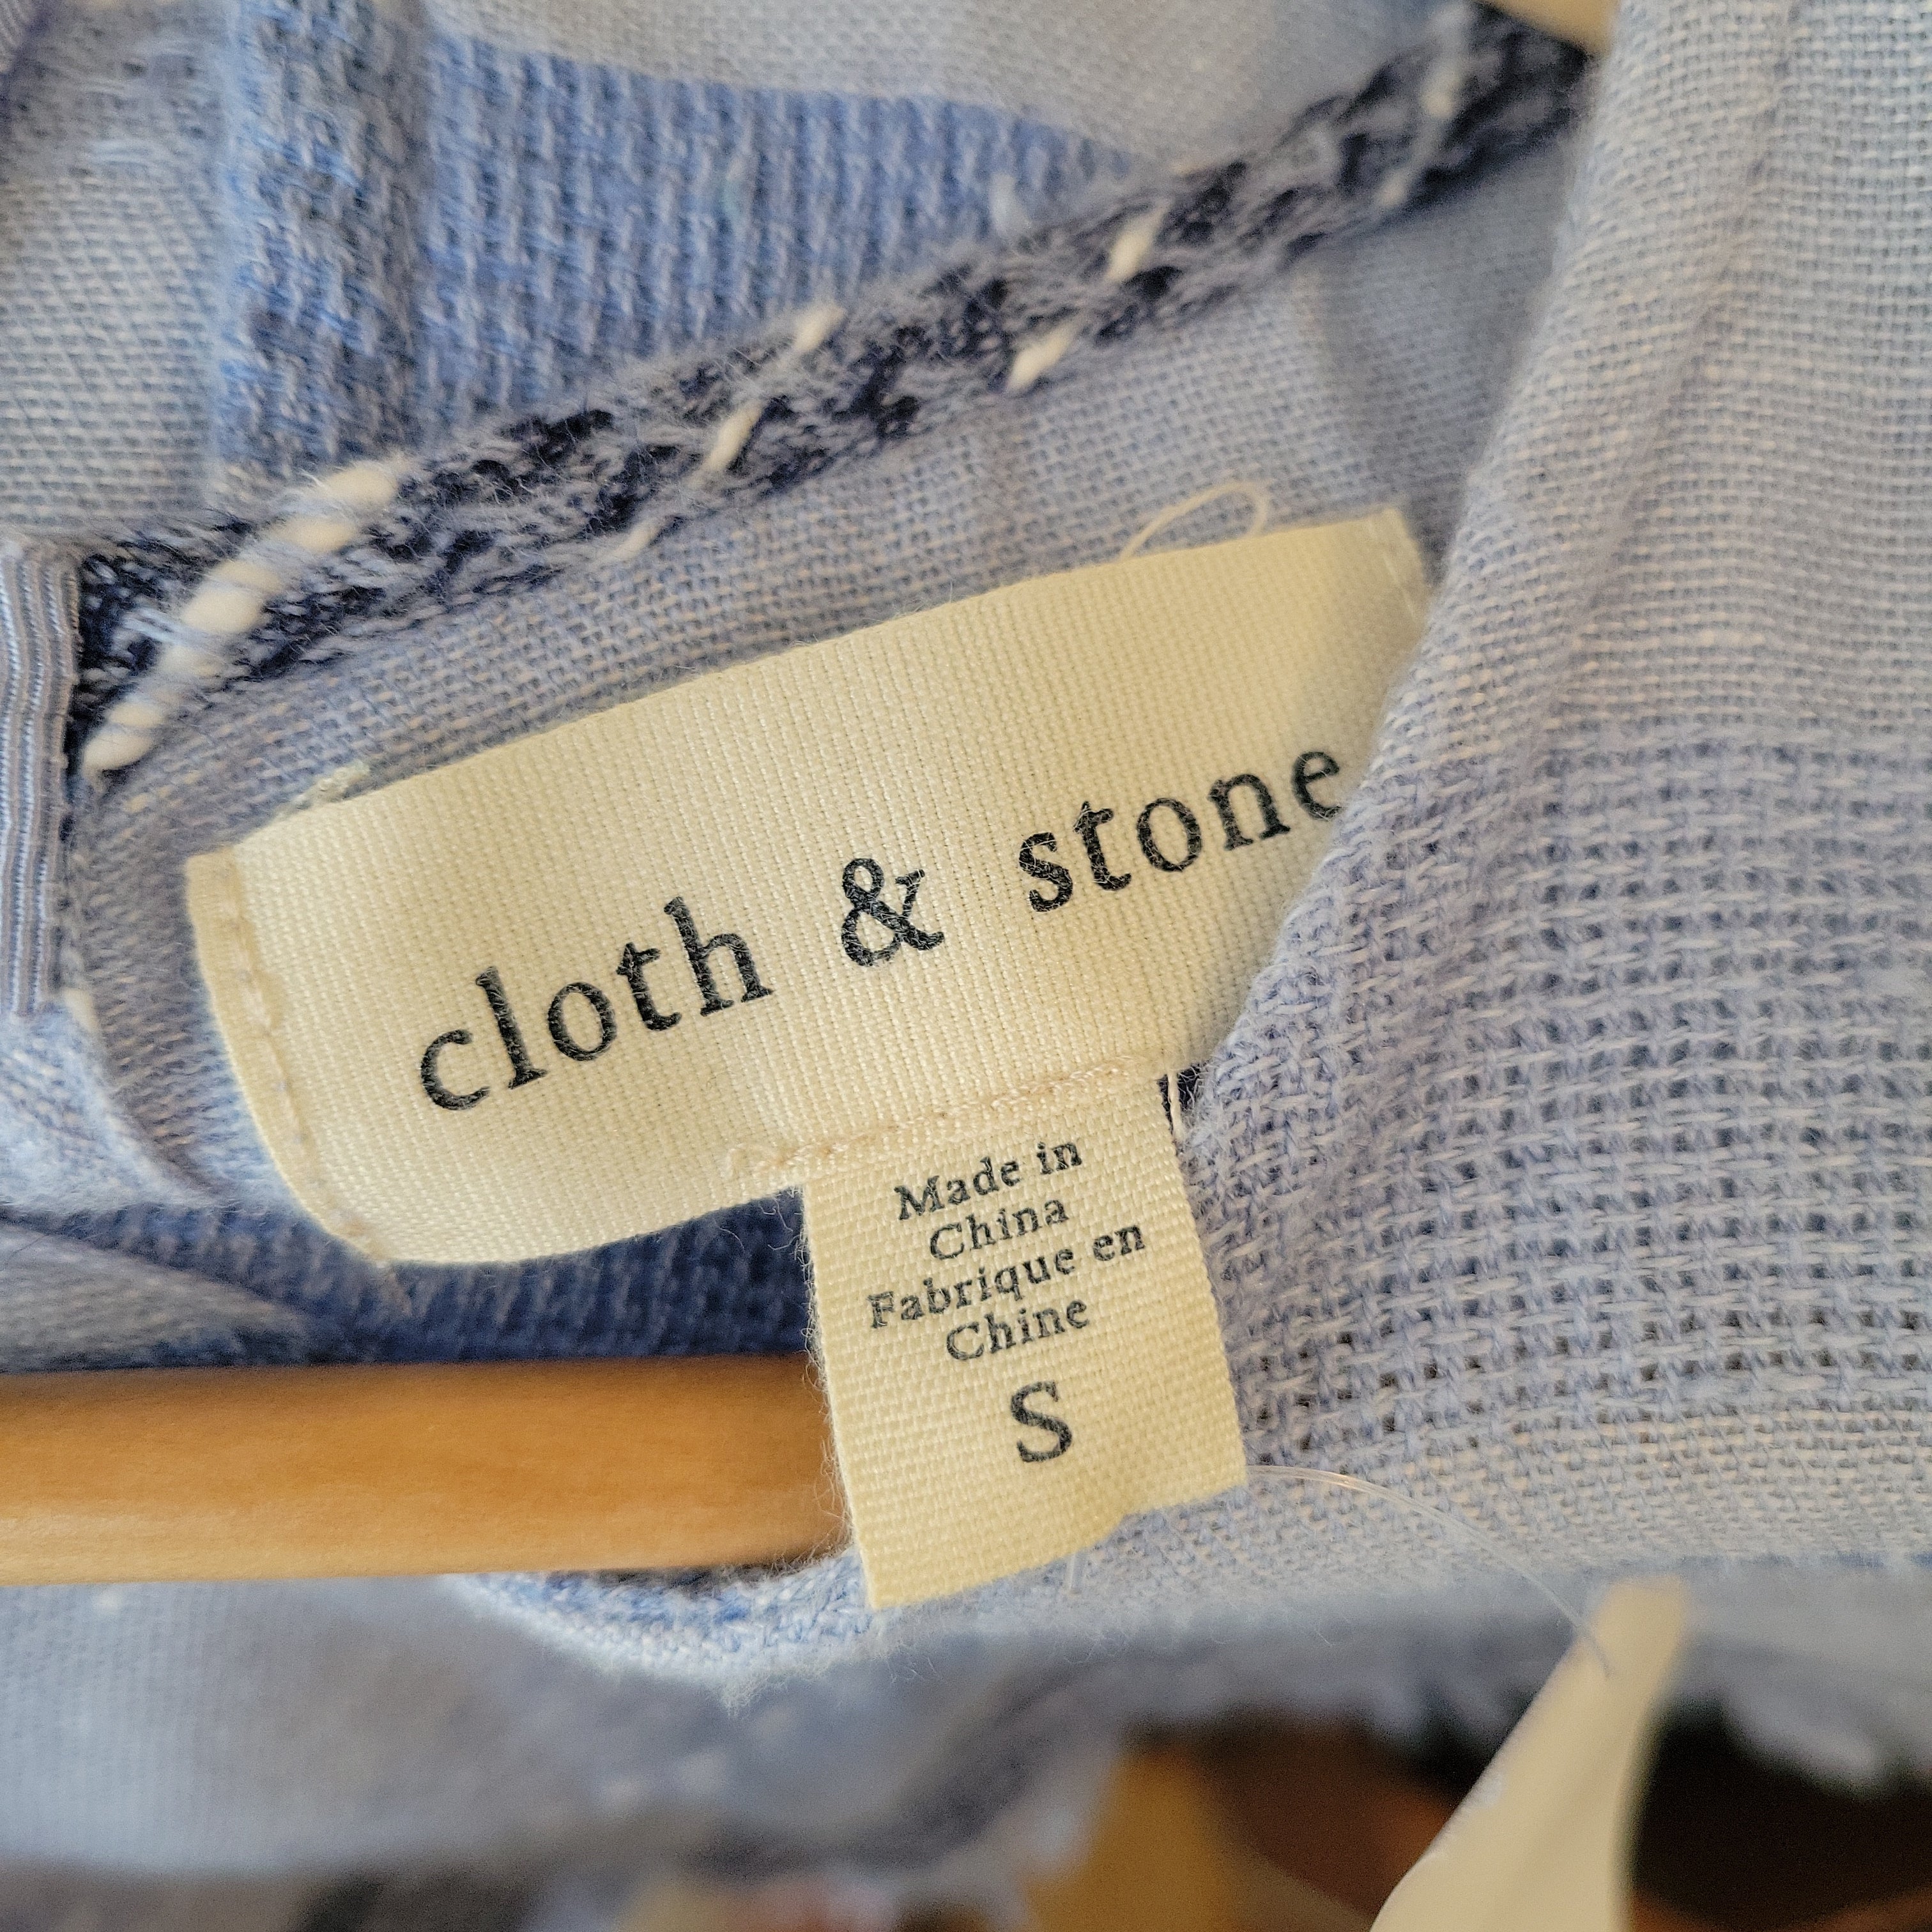 Cloth & Stone